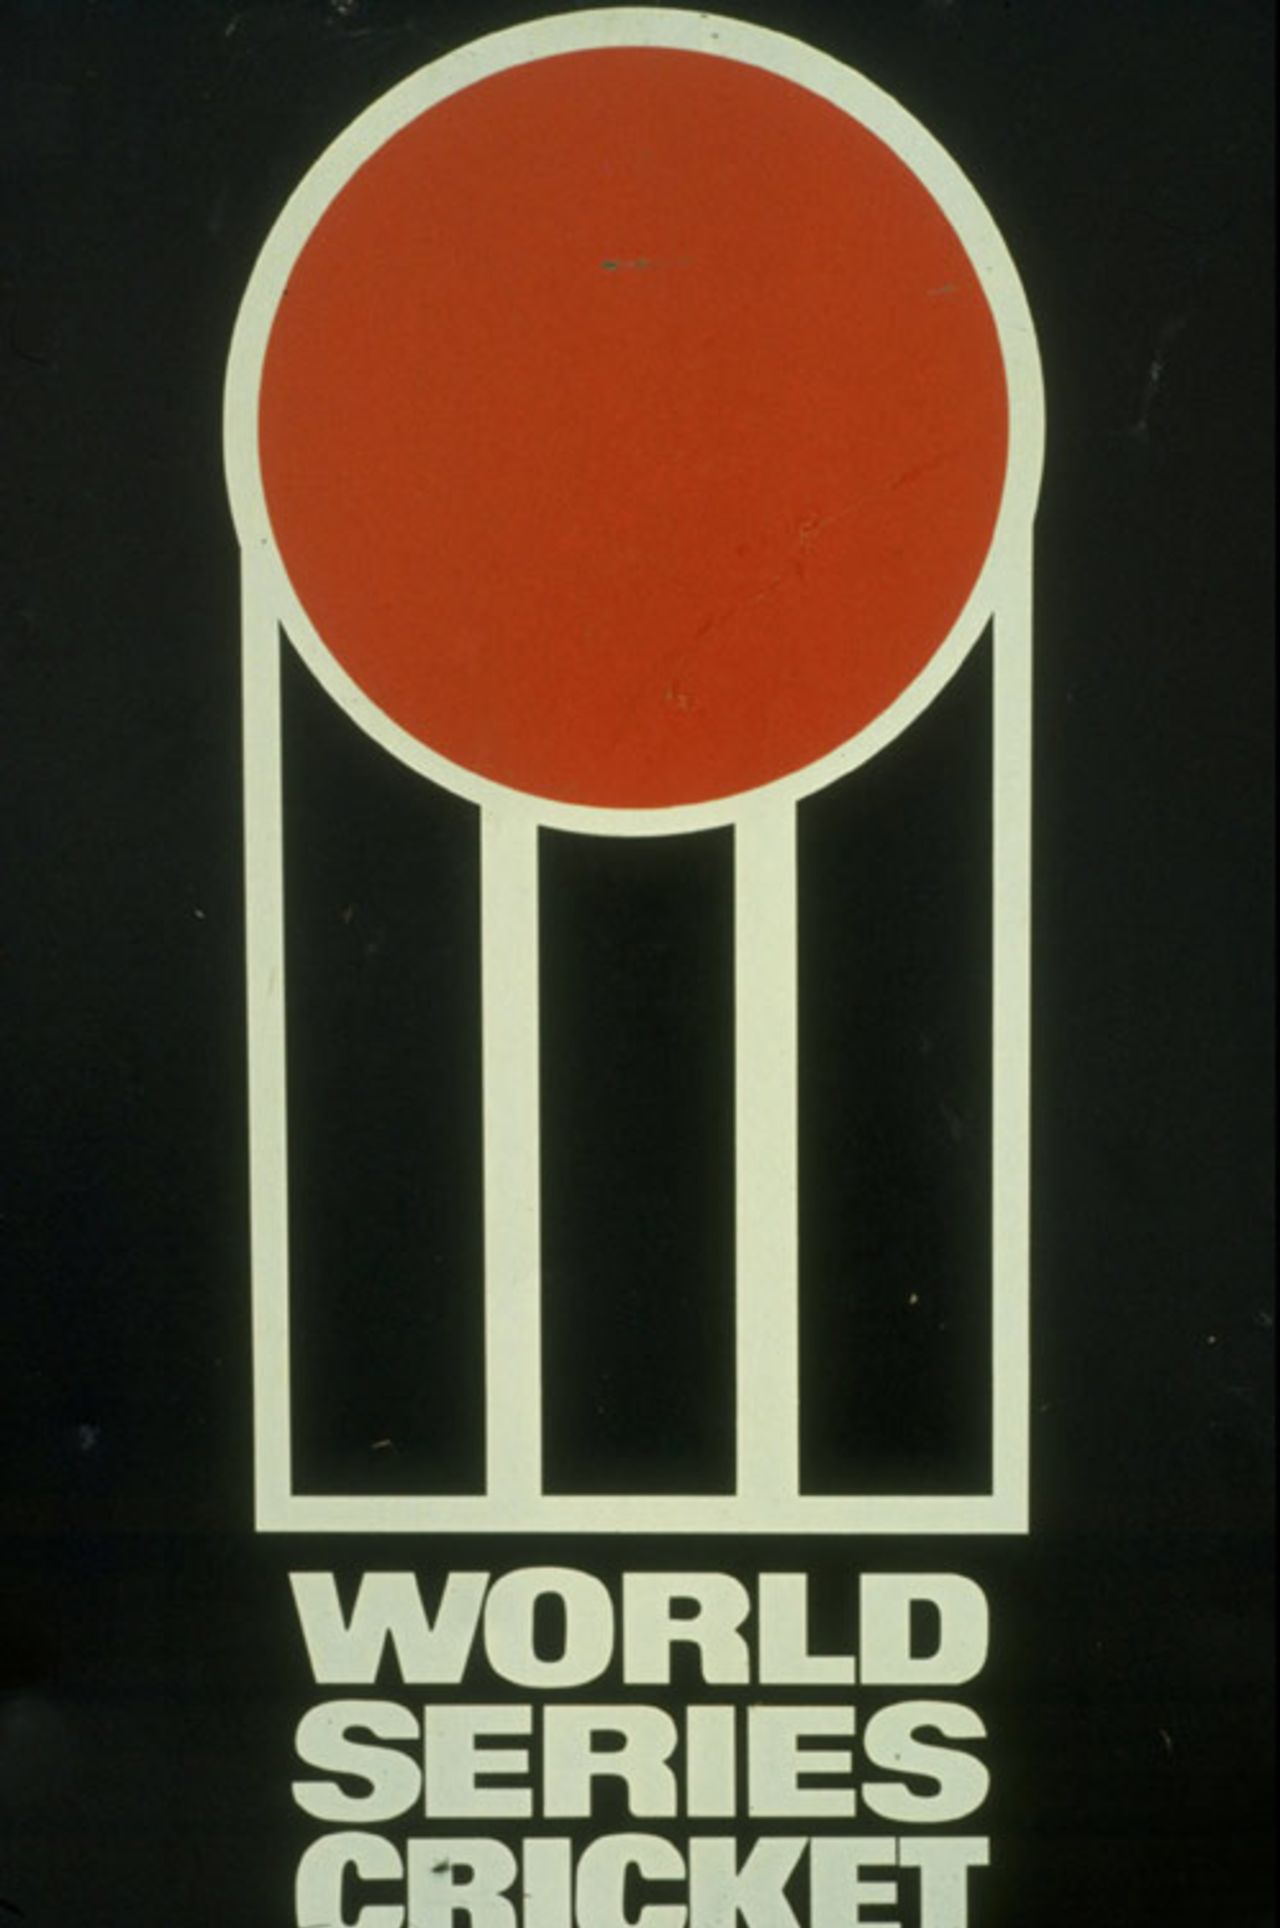 The World Series Cricket logo